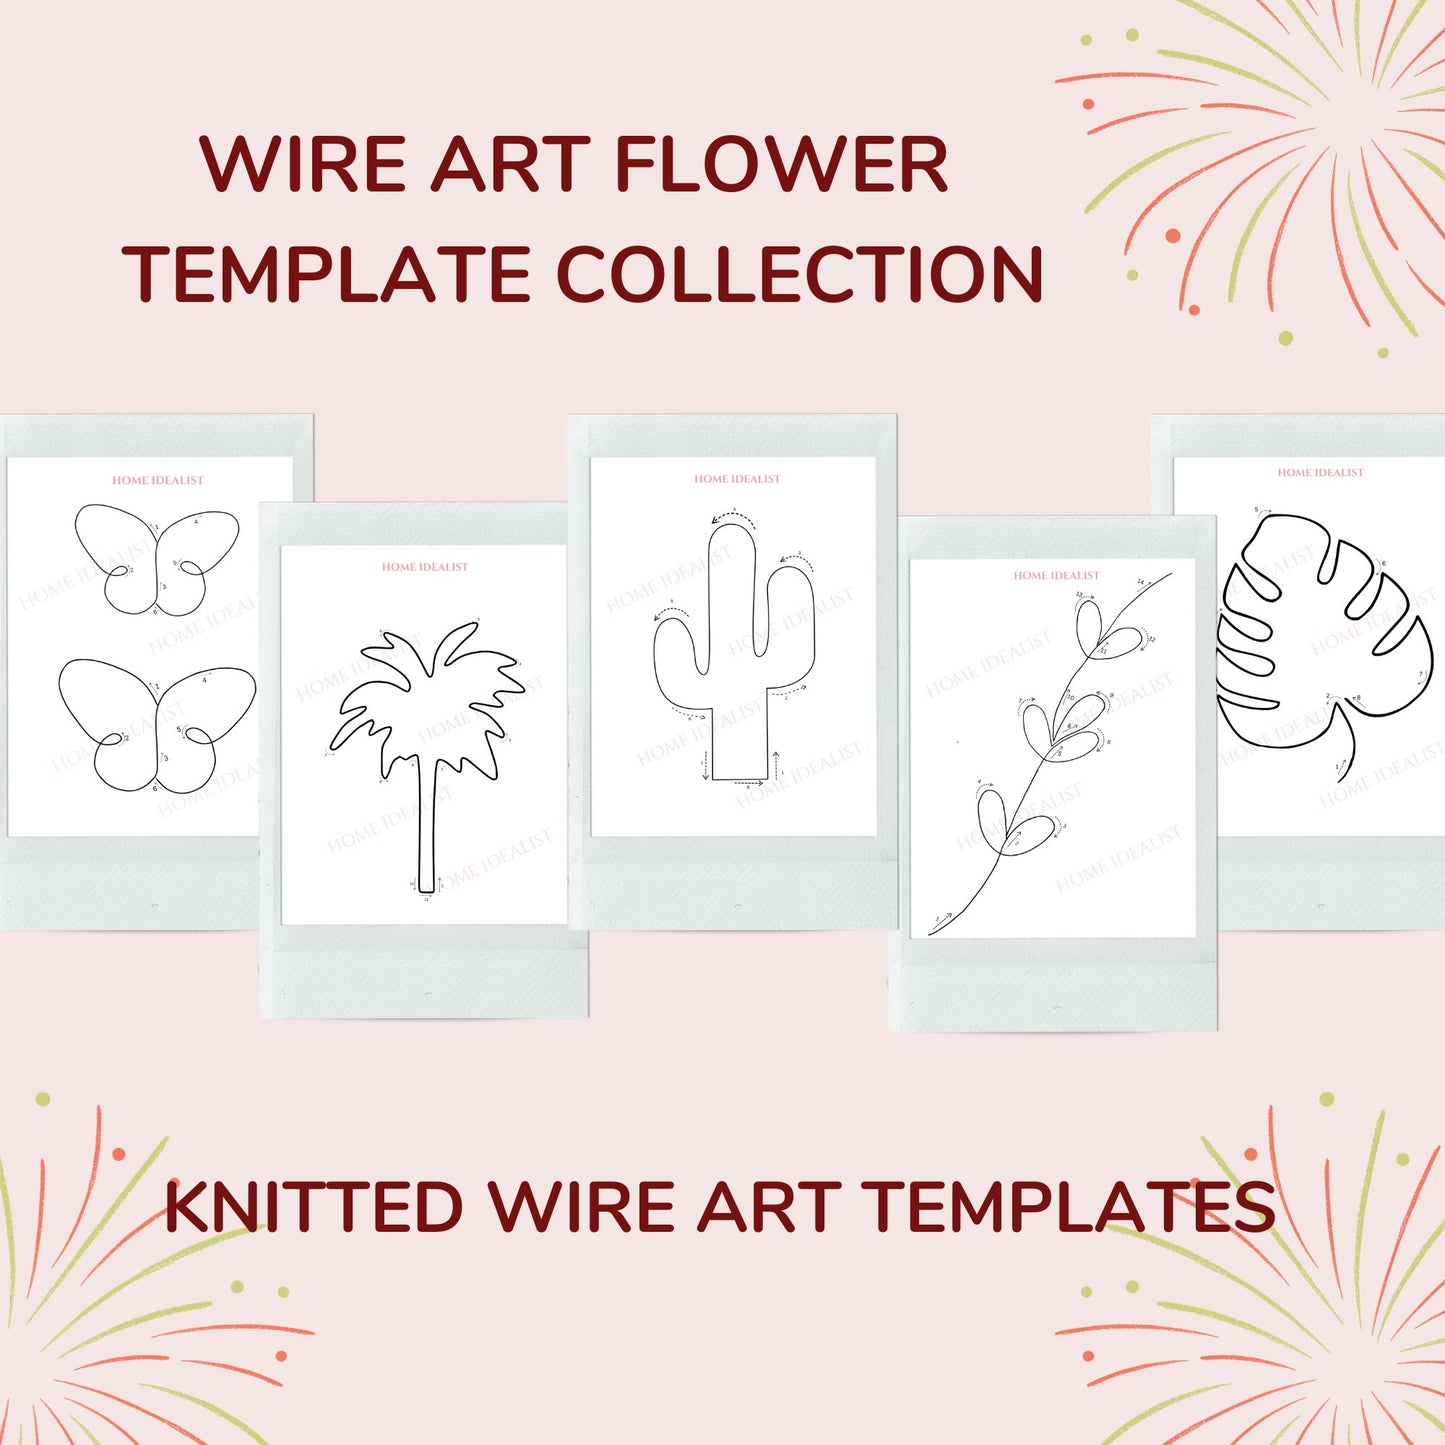 30 Garden Knitted Wire Art Templates